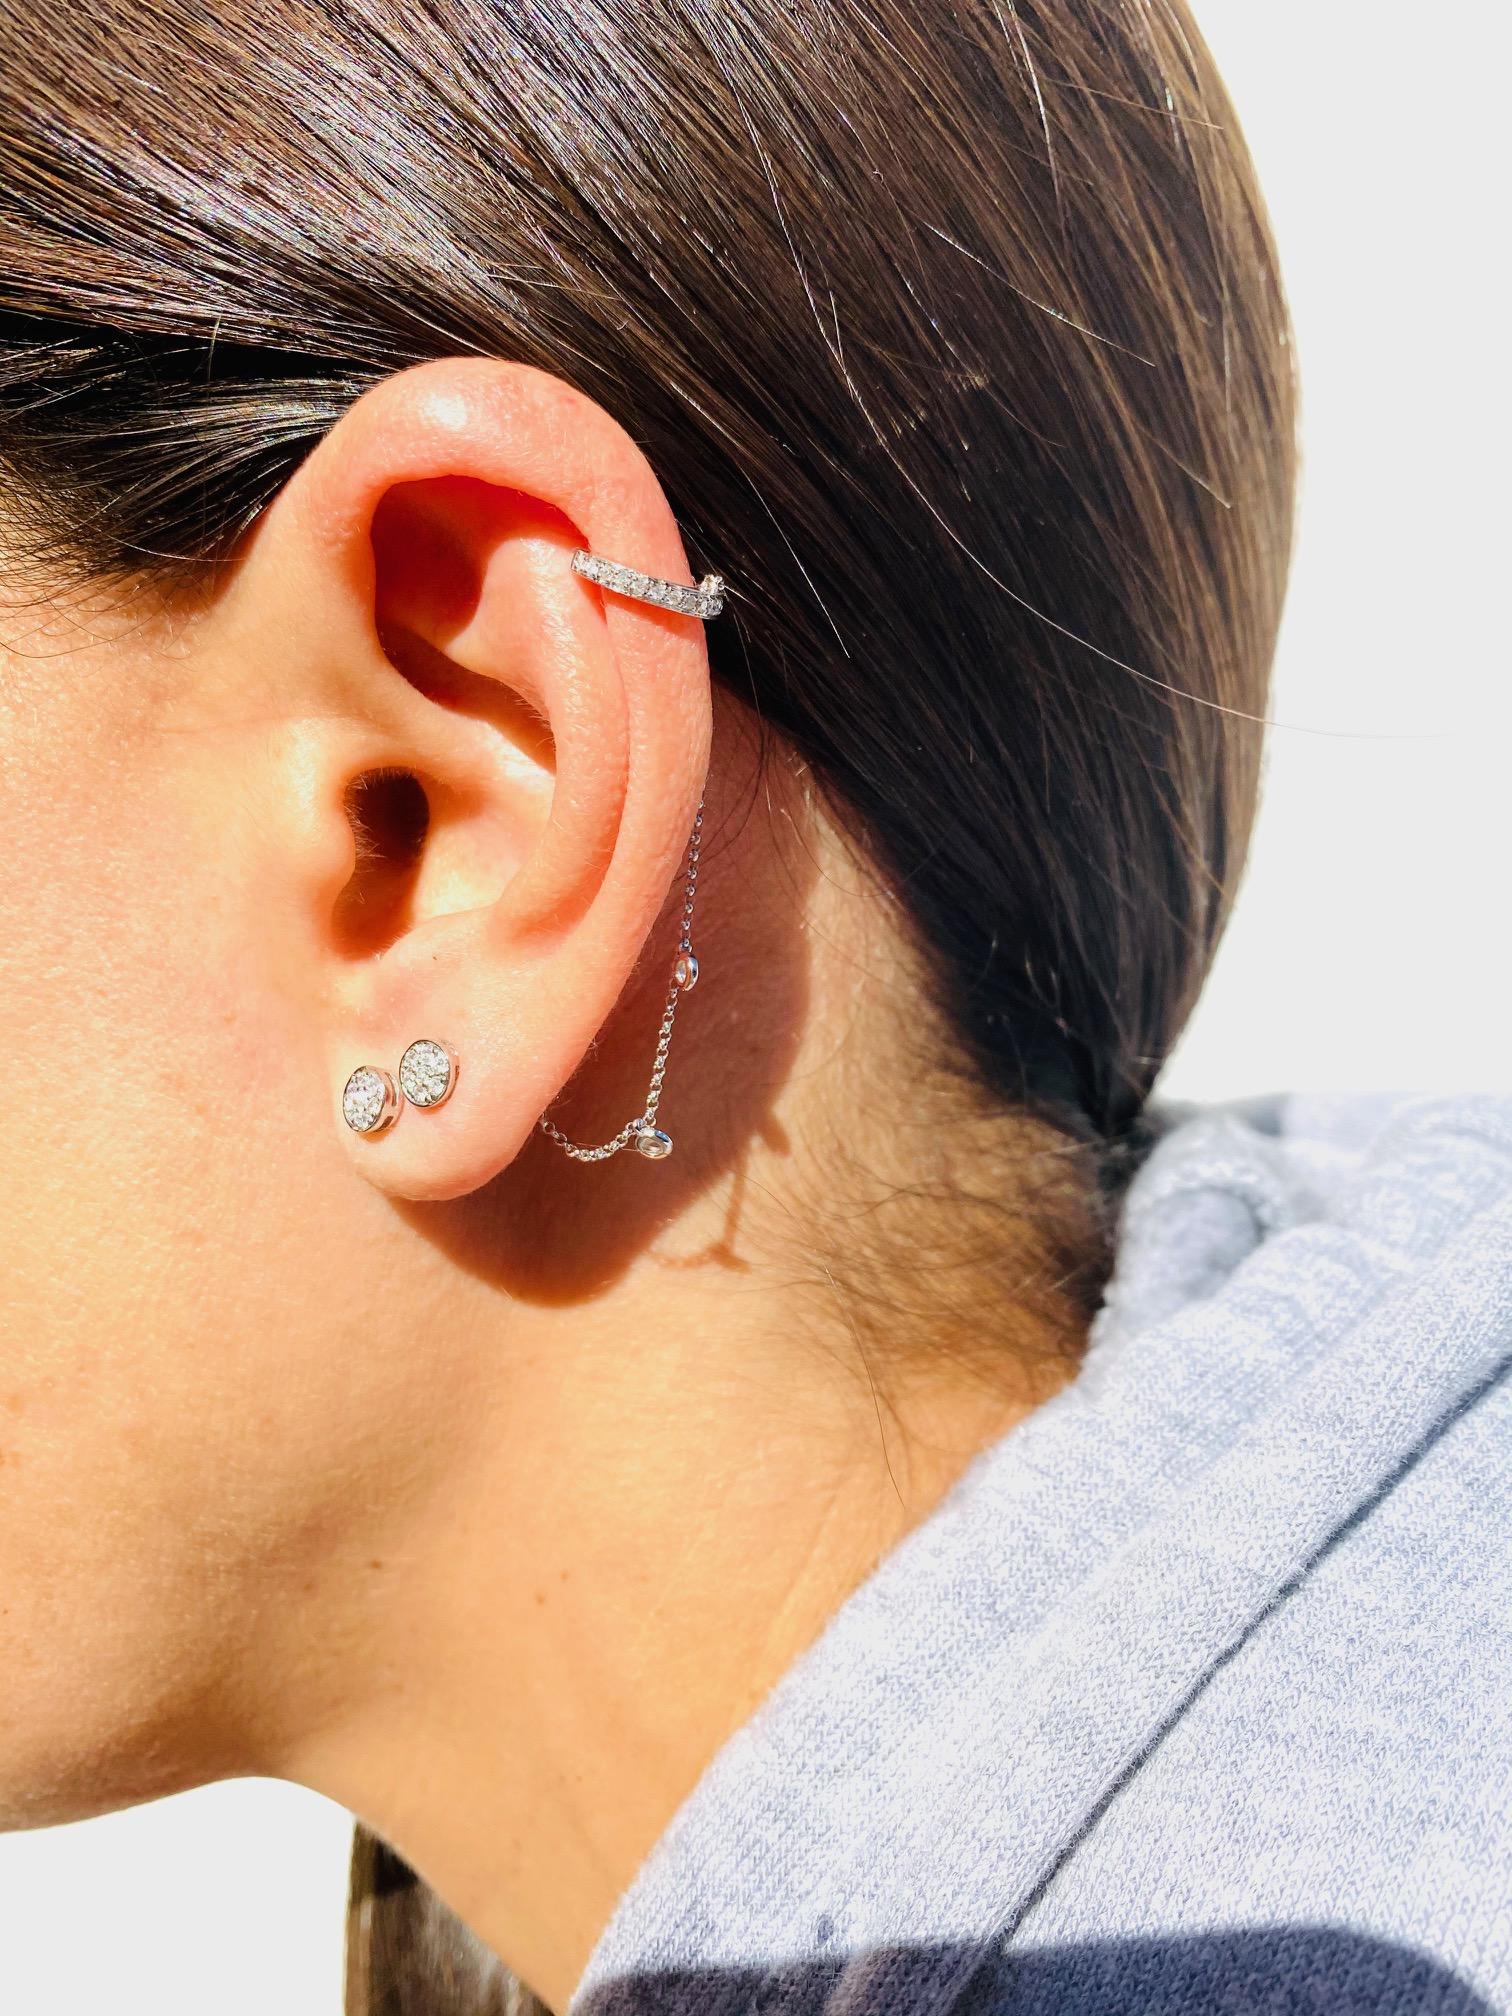 earring ideas for 4 holes